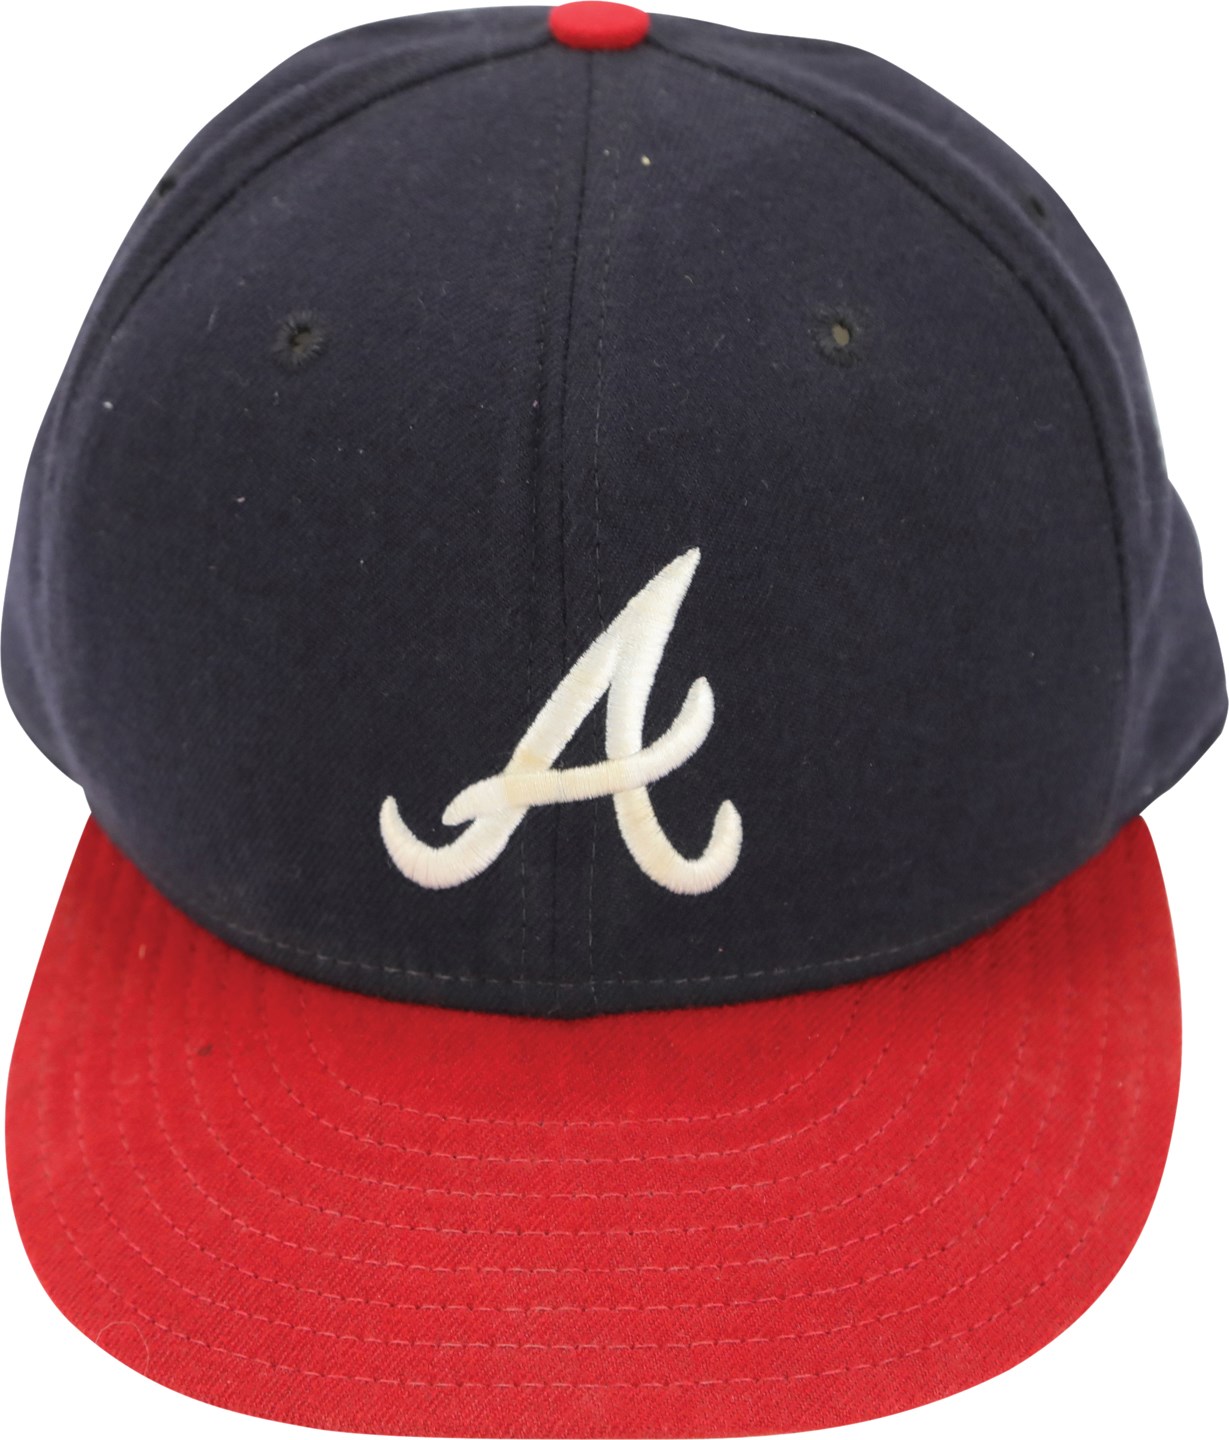 - 1993-96 Greg Maddux Autographed Atlanta Braves Game Used Hat